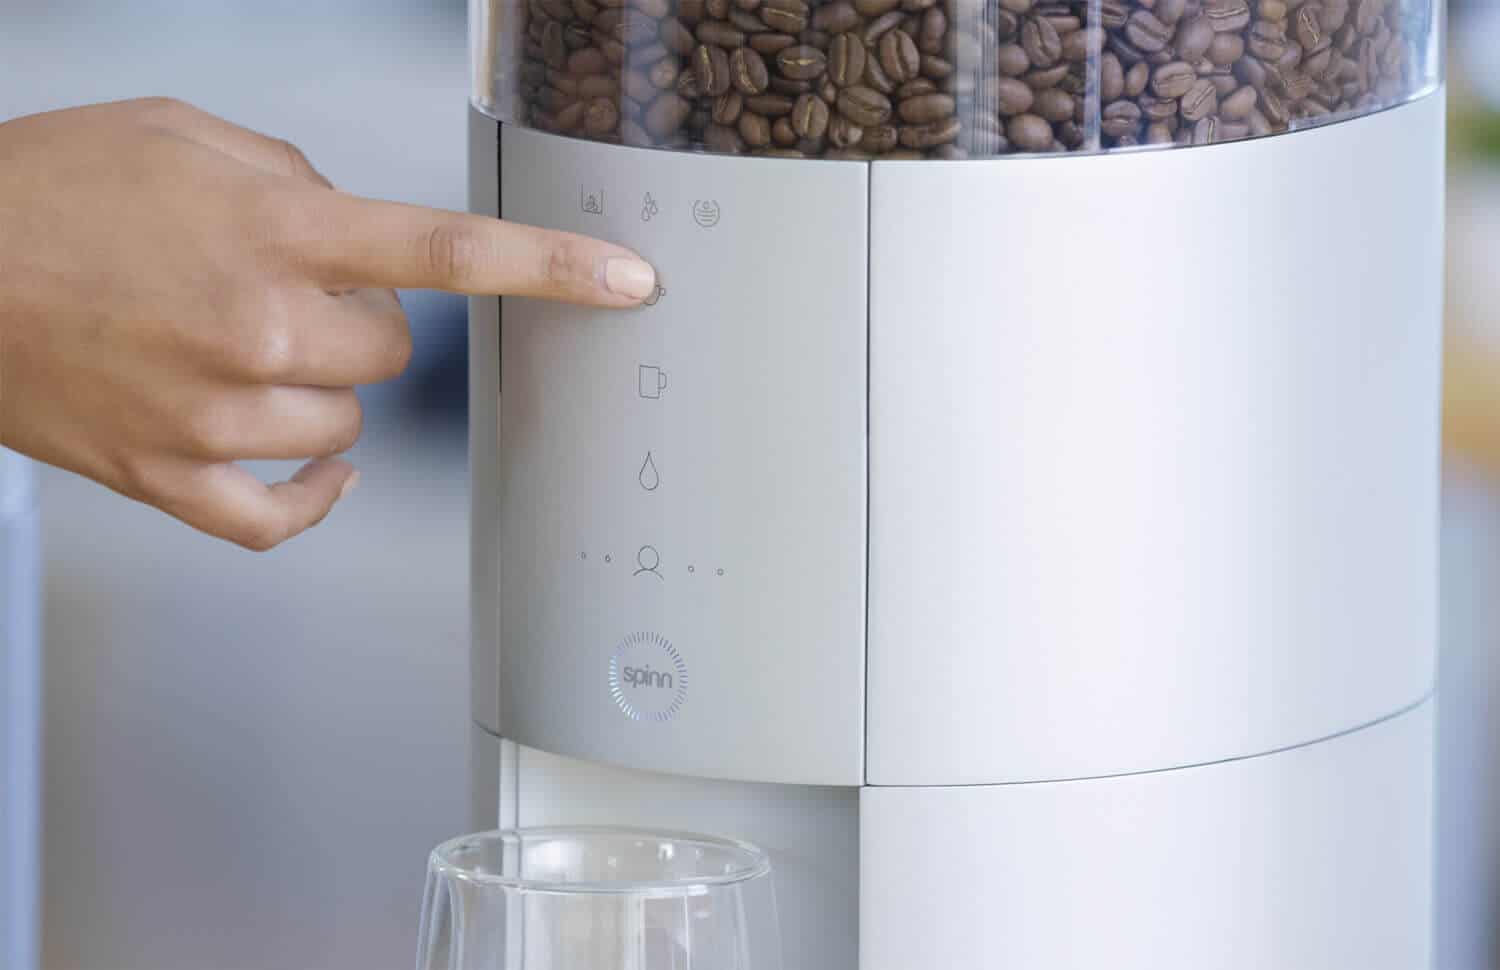 Spinn automatic coffee maker